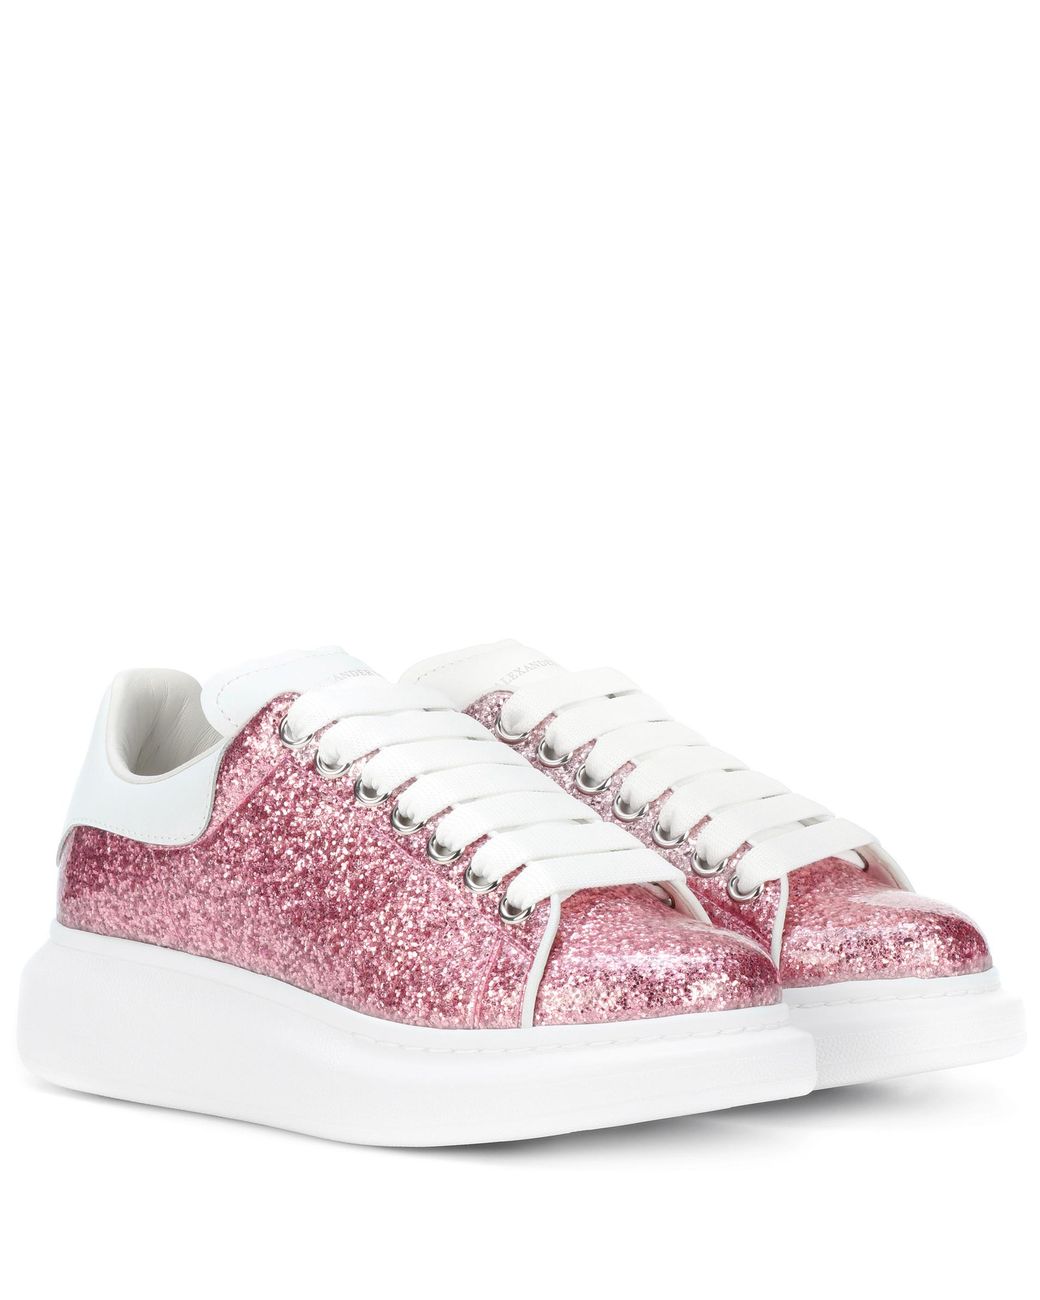 Alexander McQueen Glitter Platform Leather Sneakers in Pink | Lyst